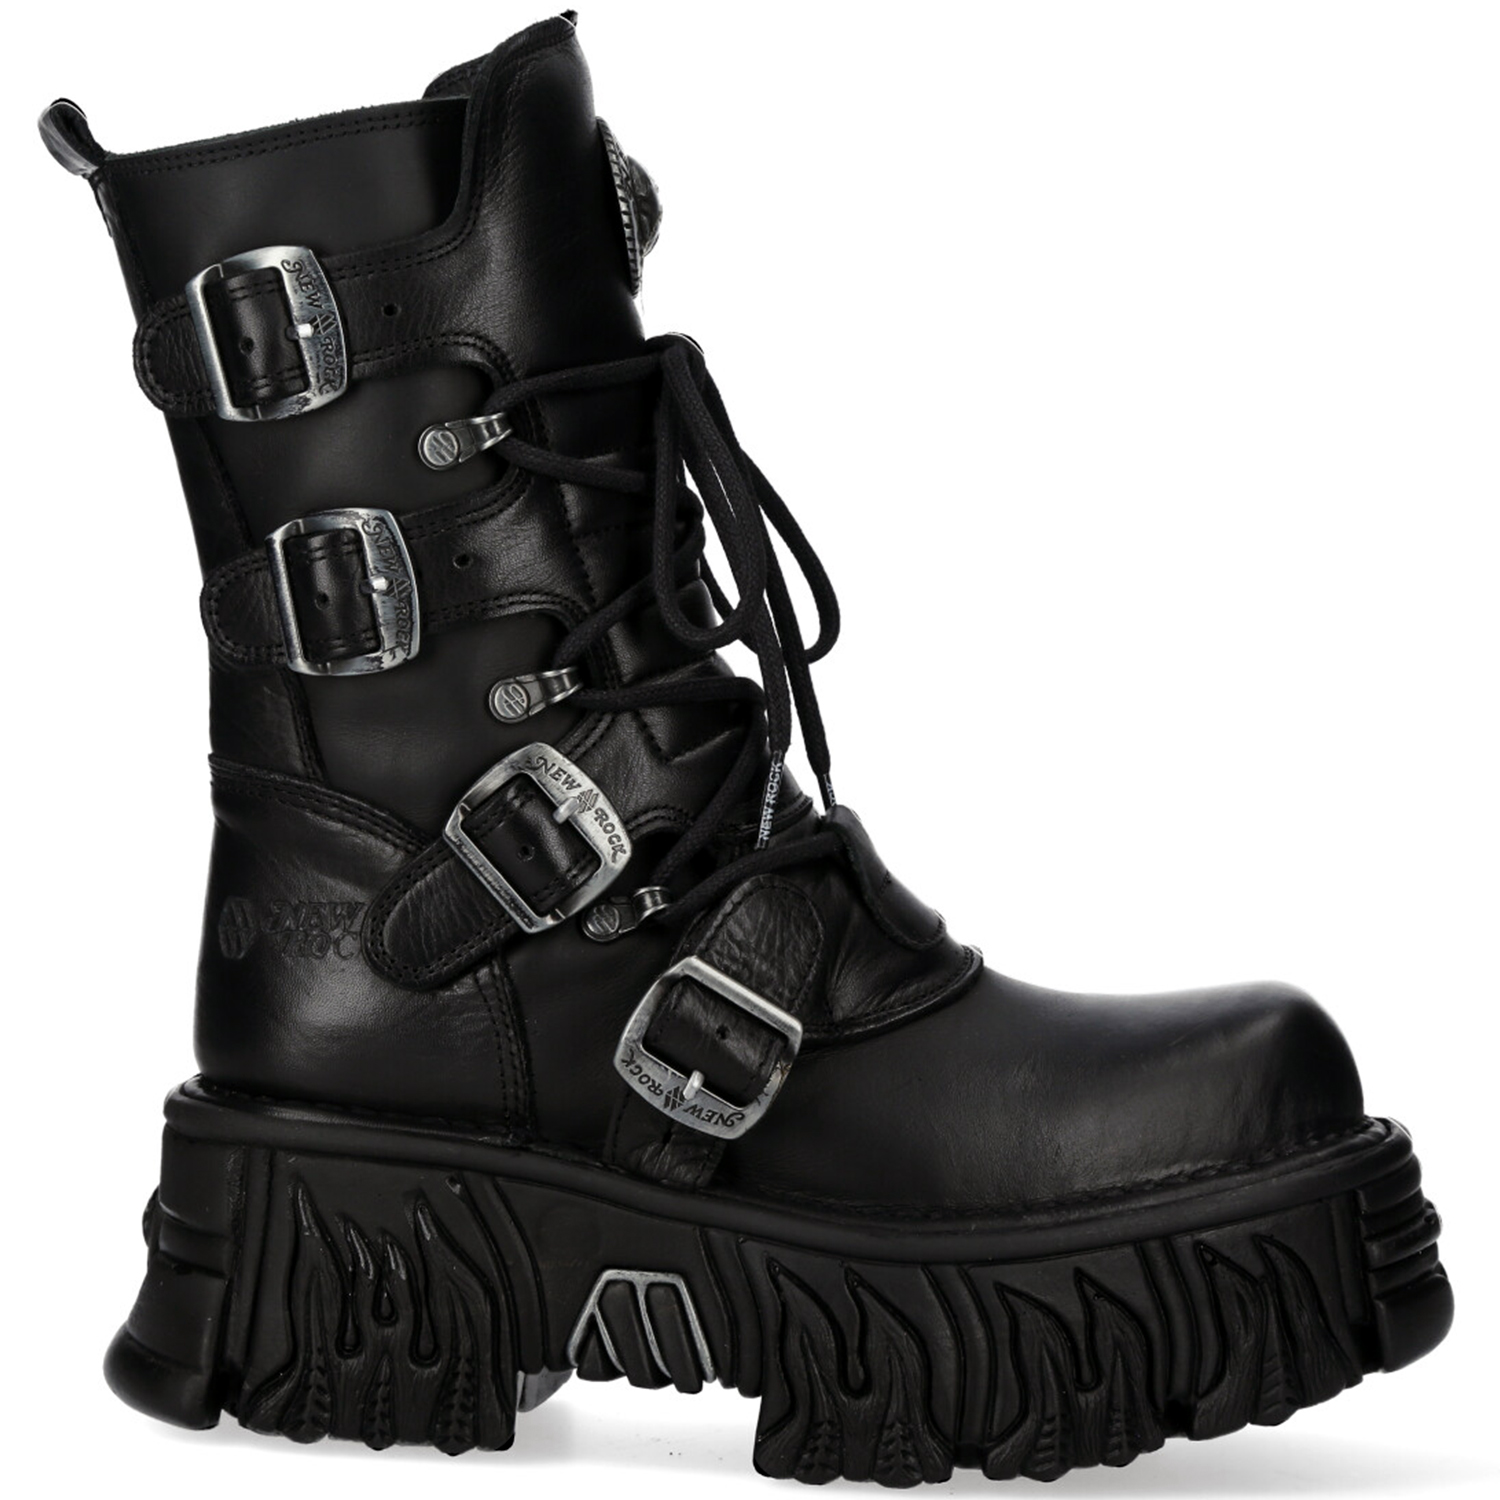 Black New Rock Metallic Boots M.373-S96 • the dark store™